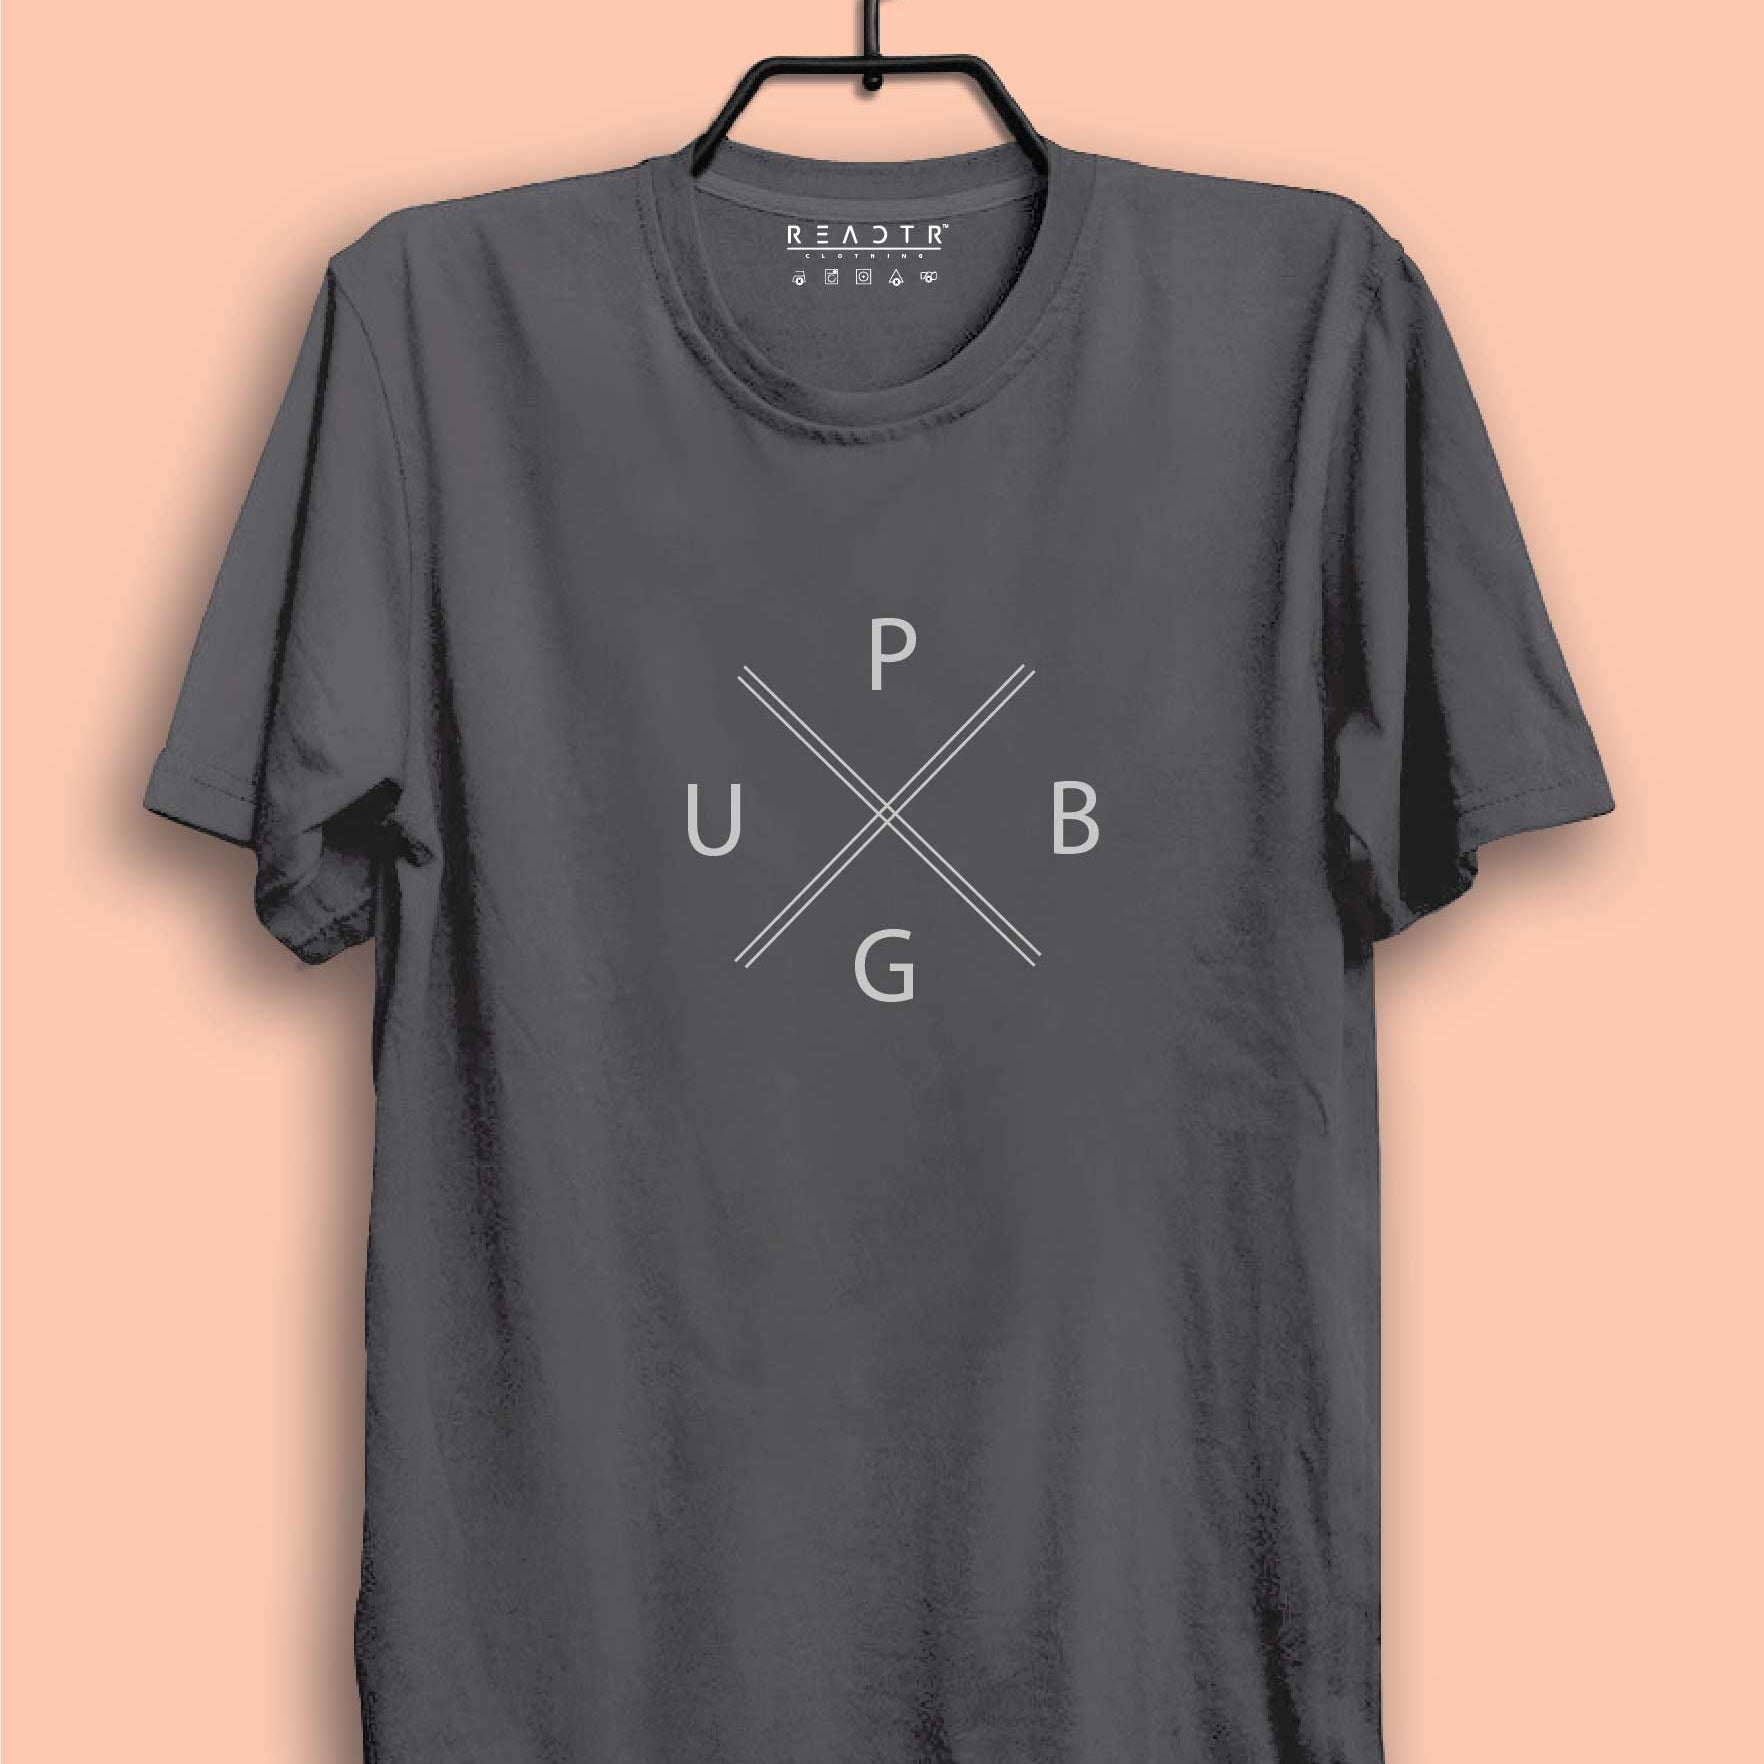 PUBG Reactr Tshirts For Men - Eyewearlabs